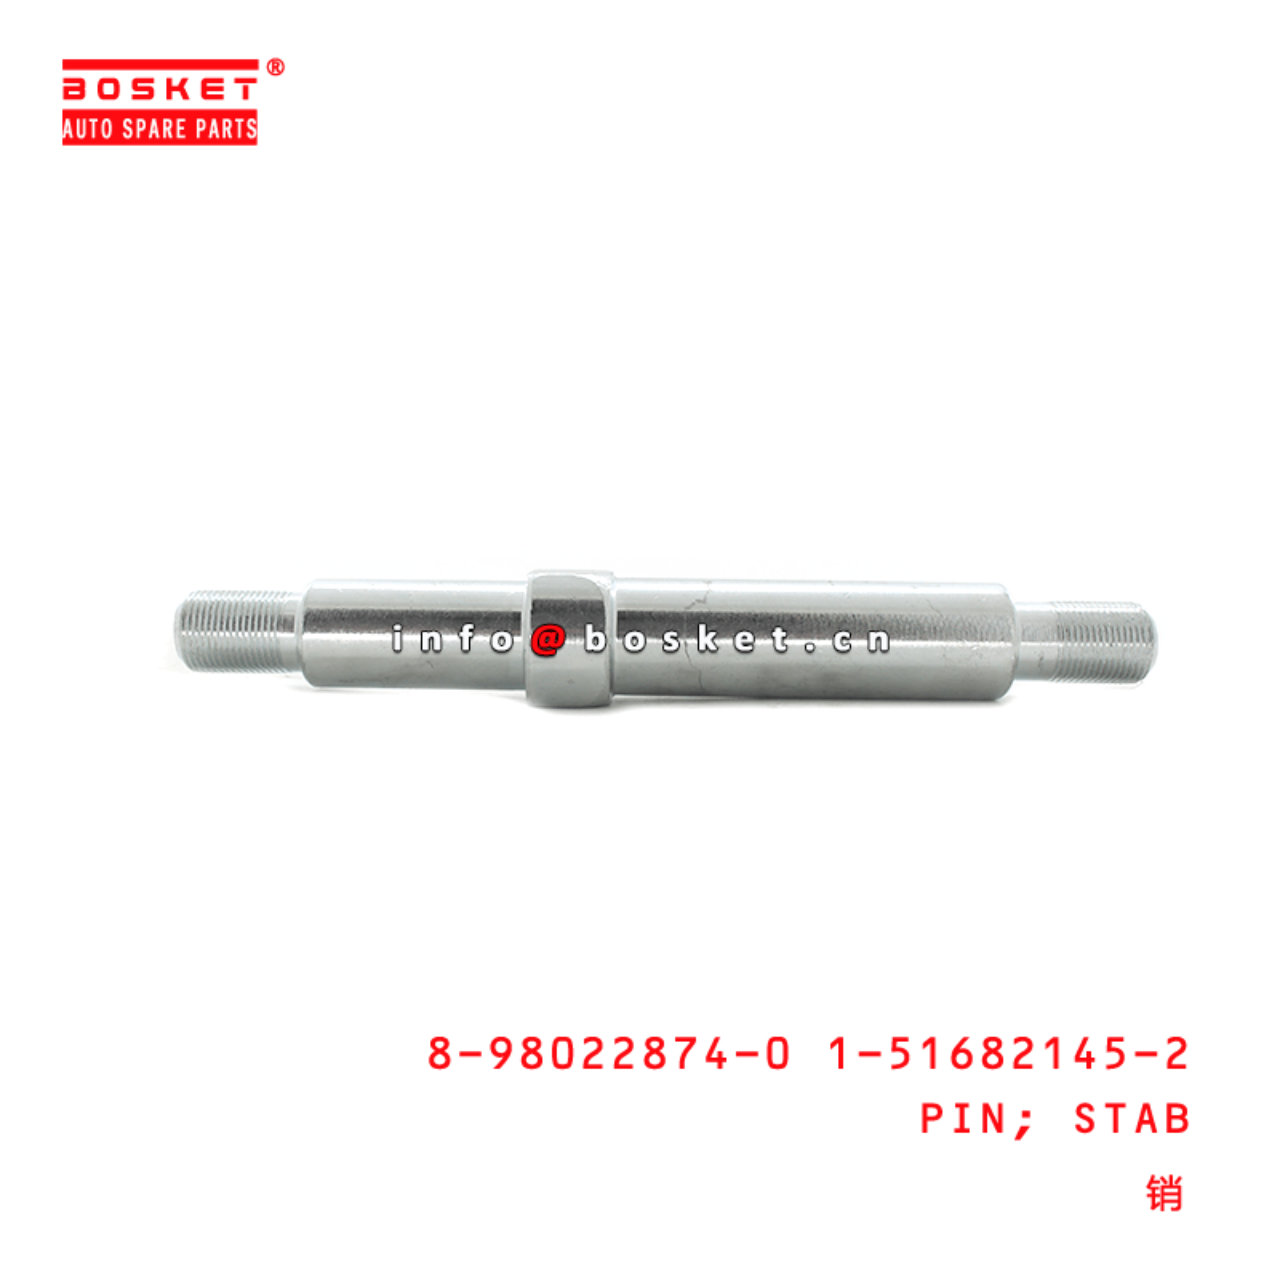 8-98022874-0 1-51682145-2 Stab Pin 8980228740 1516821452 Suitable for ISUZU FVR FTR